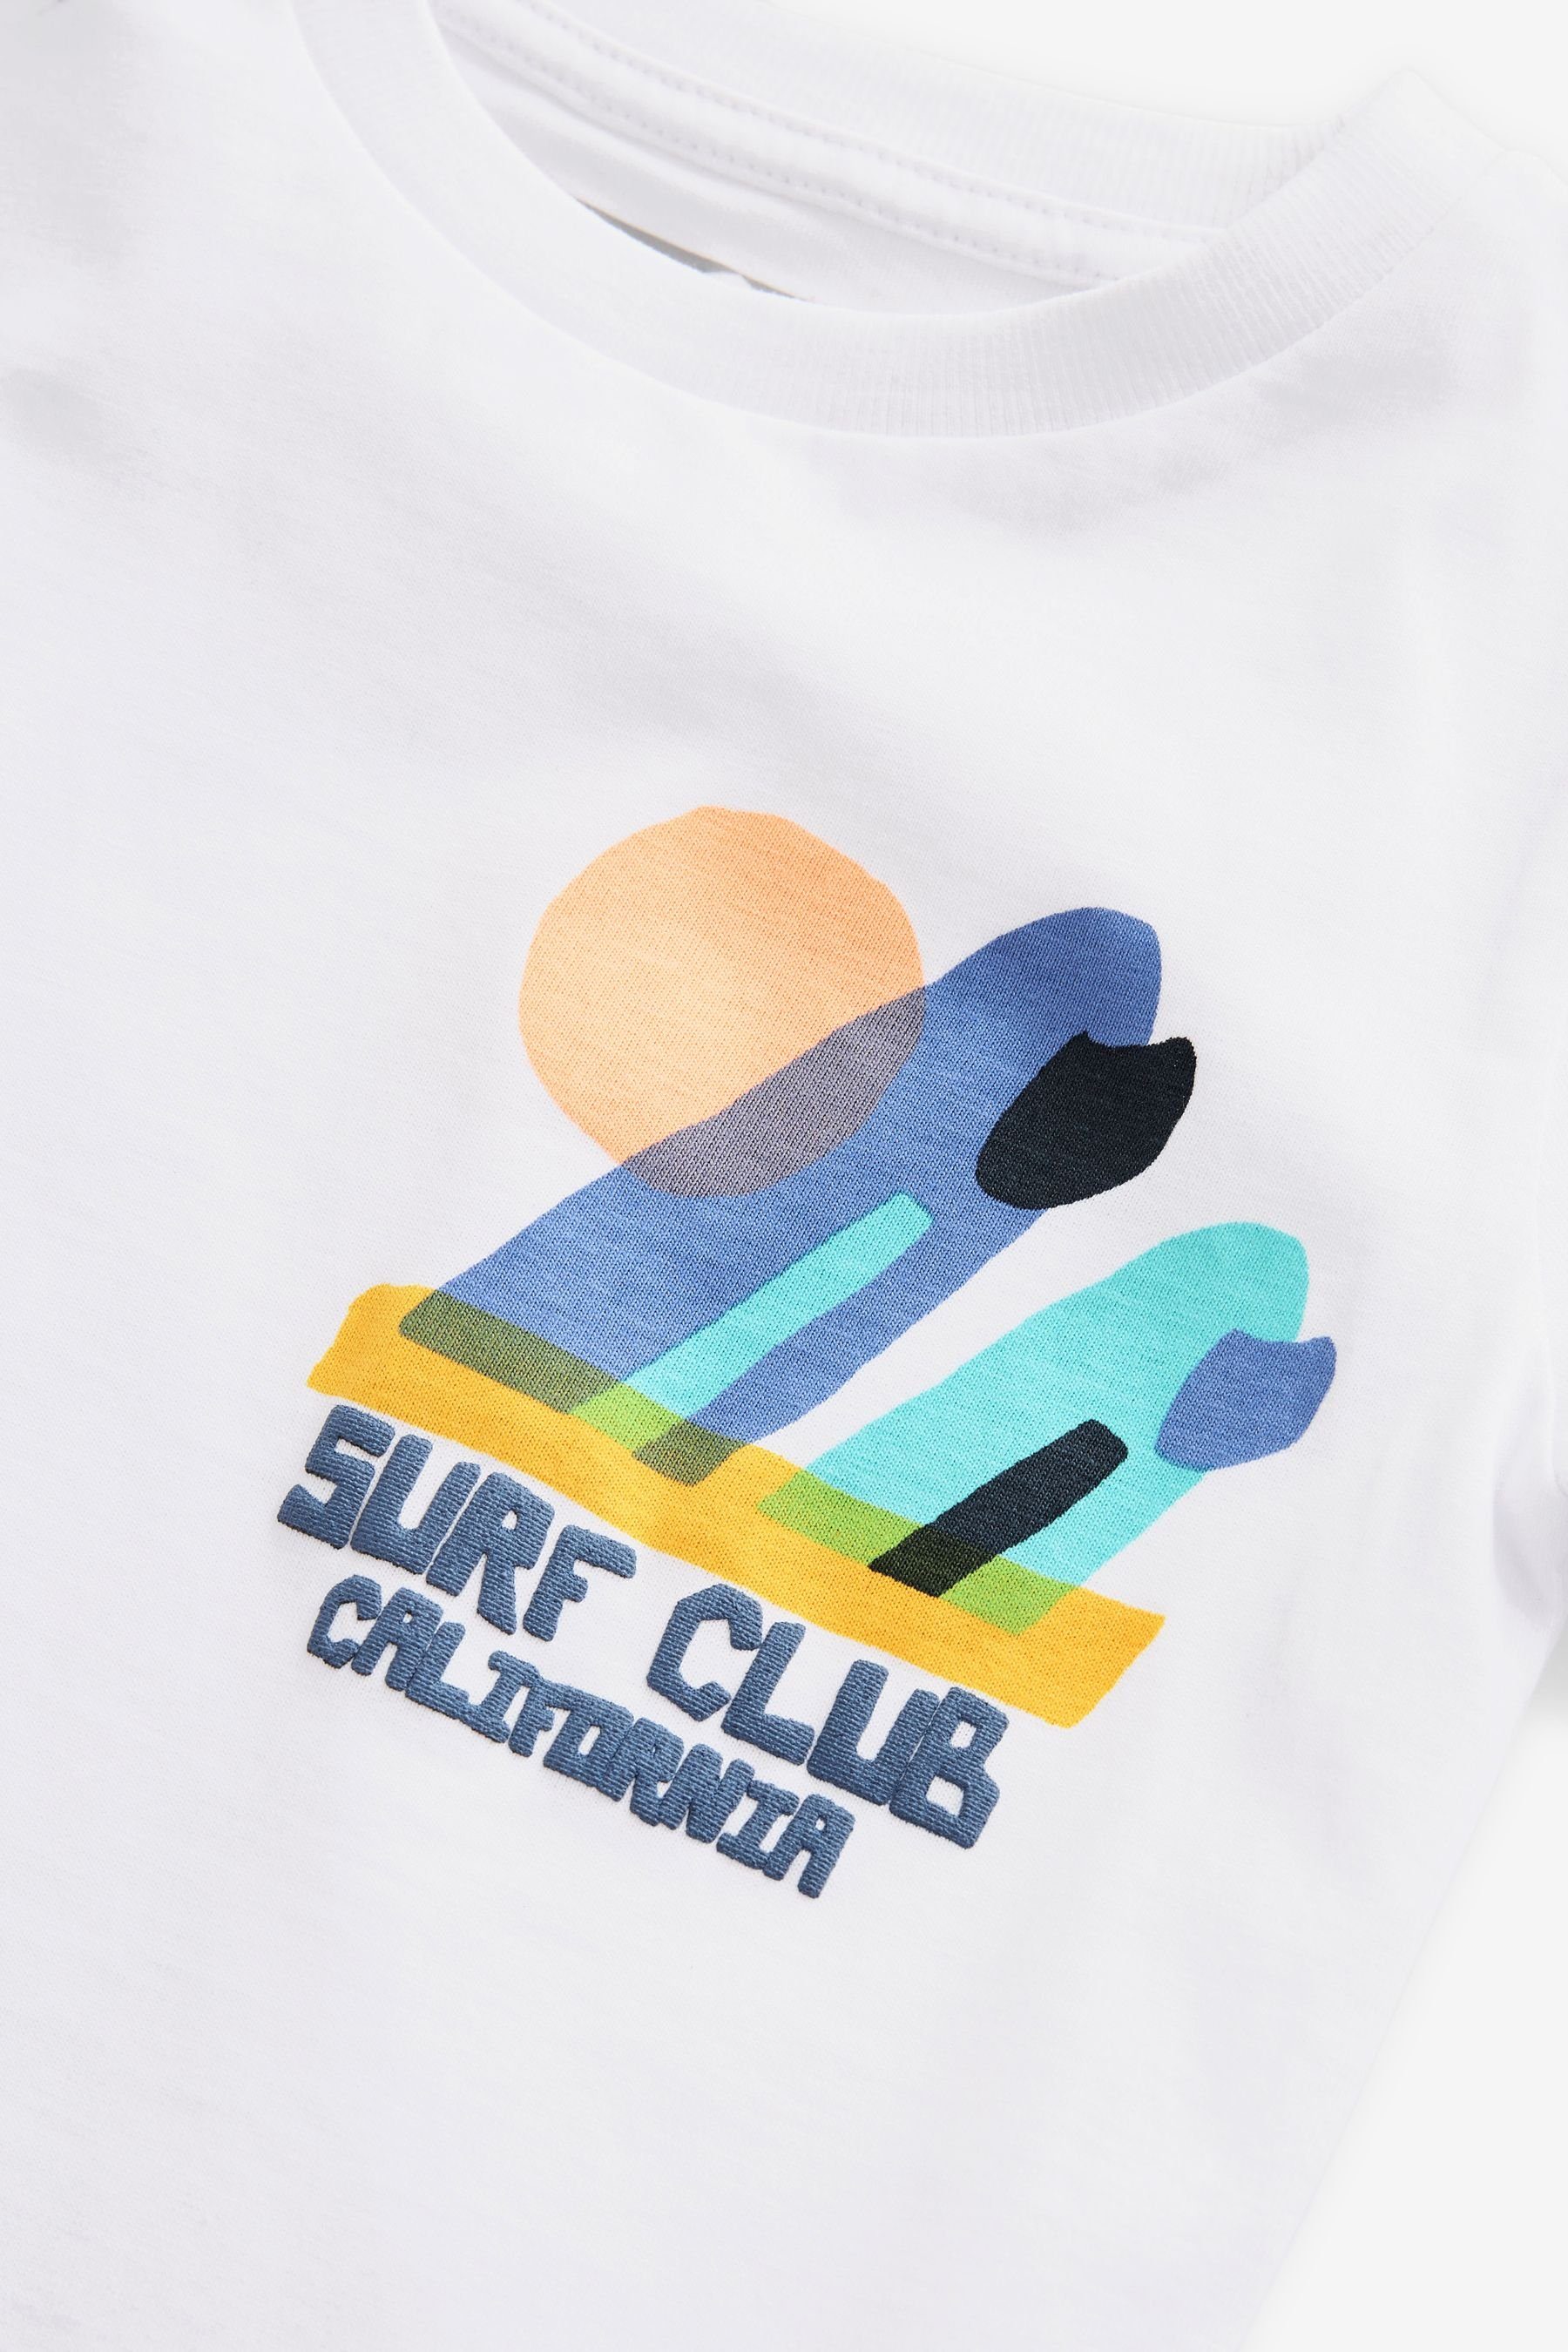 Kurzarm-T-Shirt (1-tlg) Surf T-Shirt White Next Figurenmotiv mit